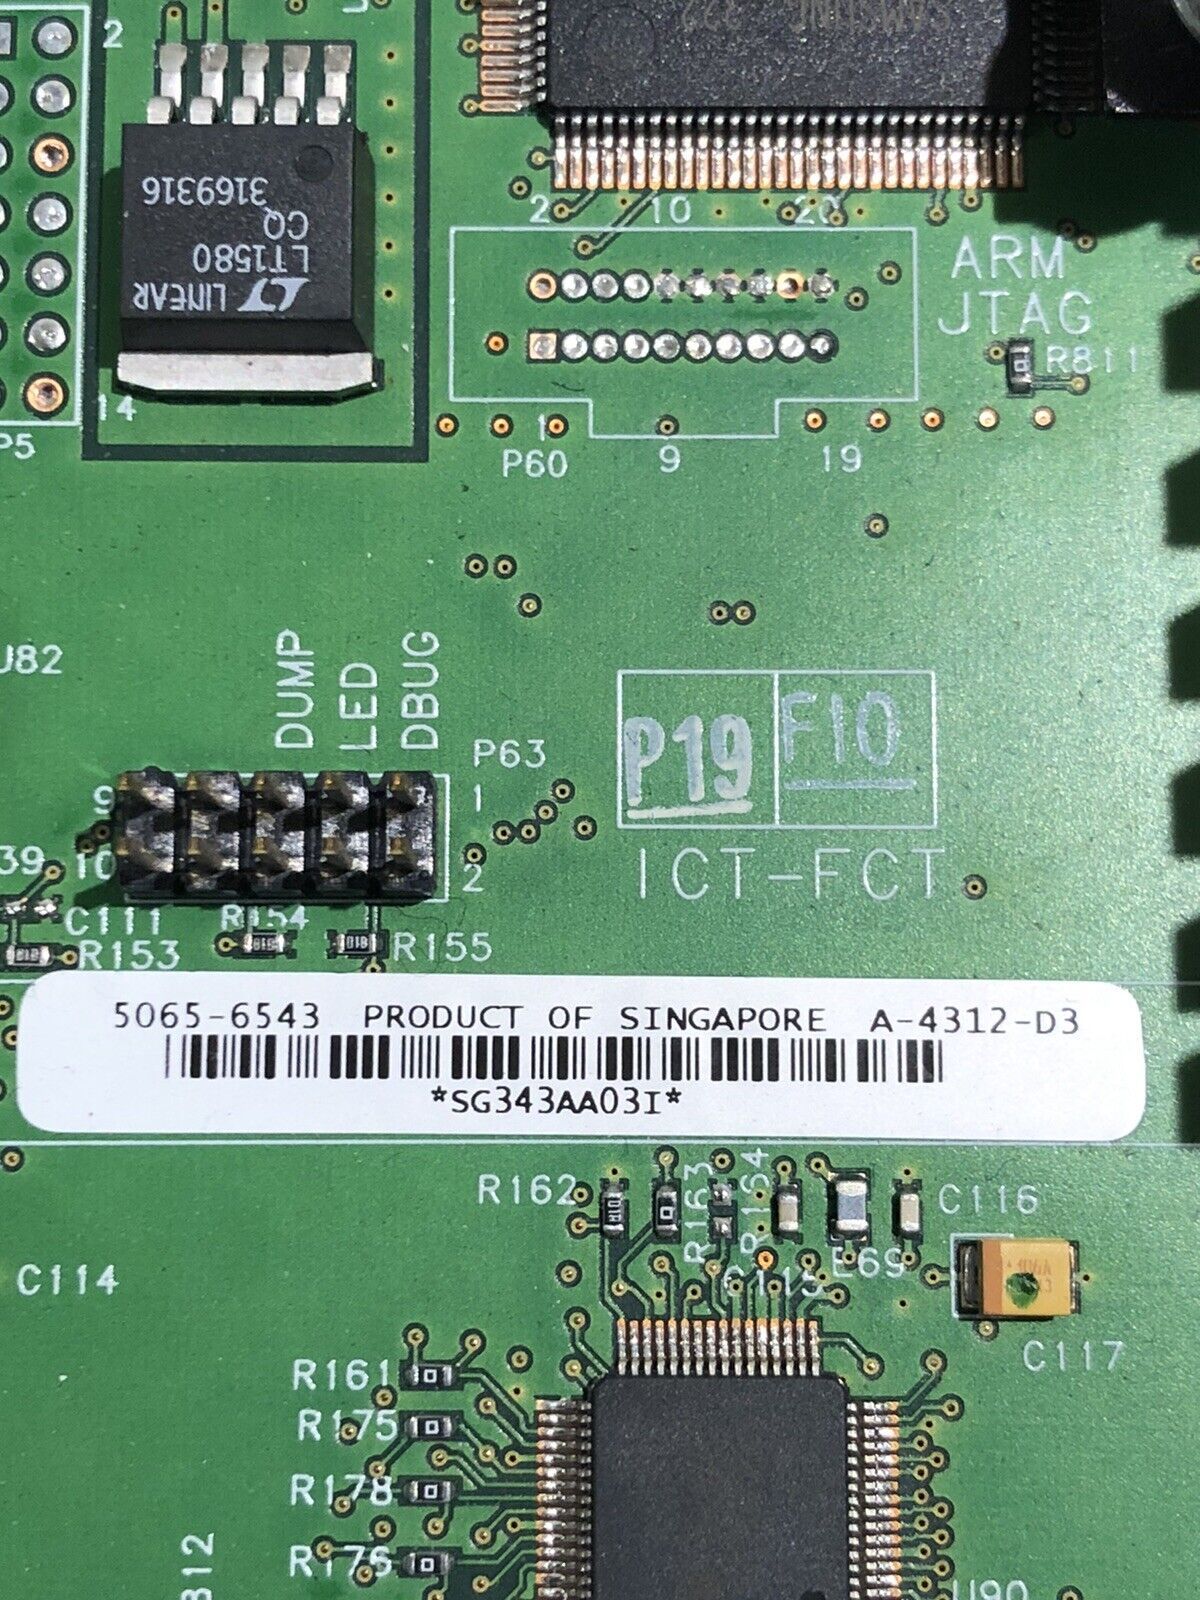 HP J4878A ProCurve mini-GBIC SFP 1GbE XL Module for 5373xl 5308xl 5348xl 5304xl.